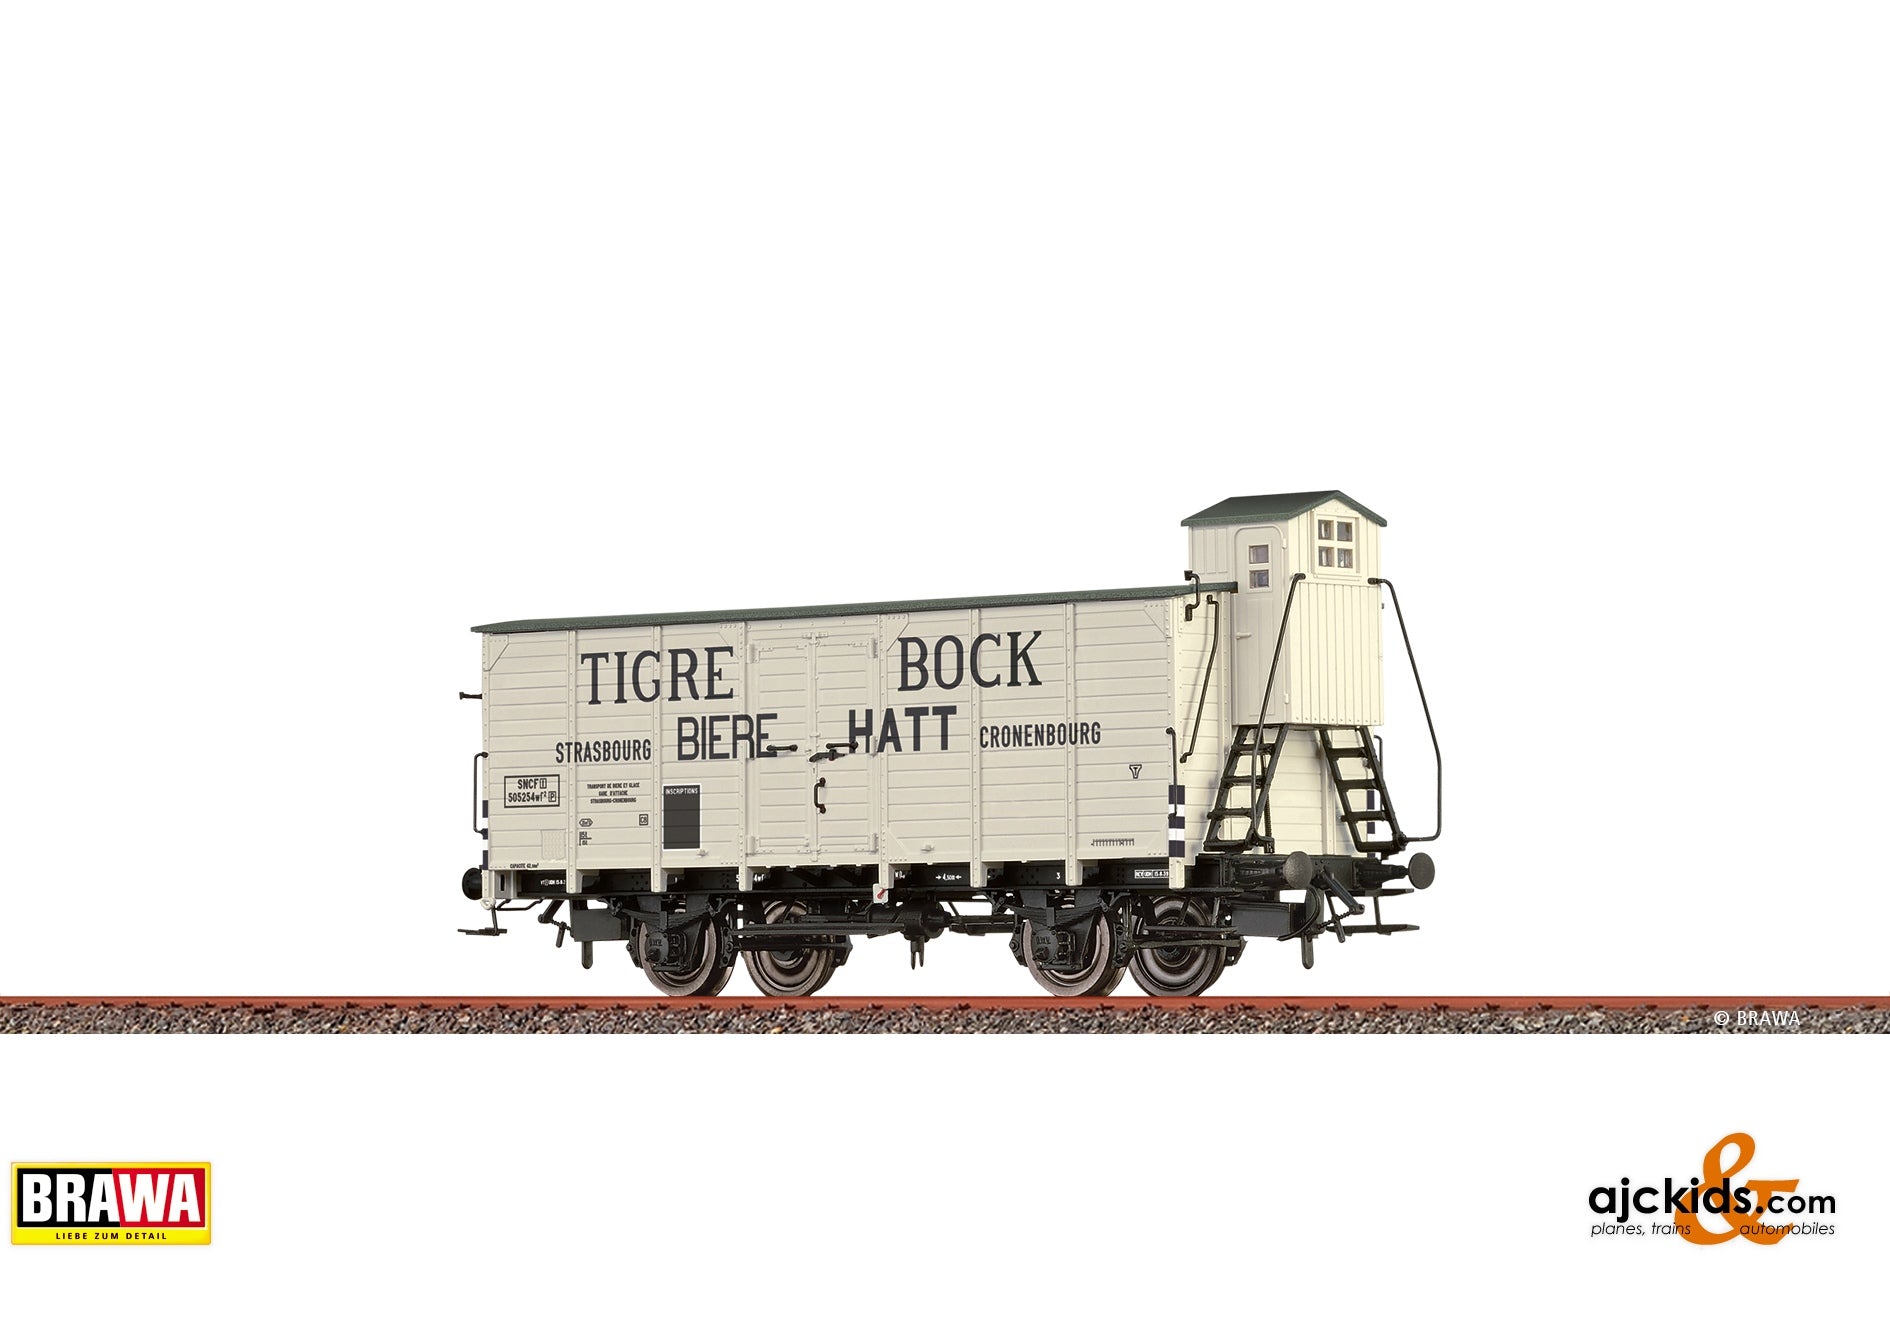 Brawa Freight Car wf² SNCF, Era II, Tigre Bock 38.61 at Ajckids.com